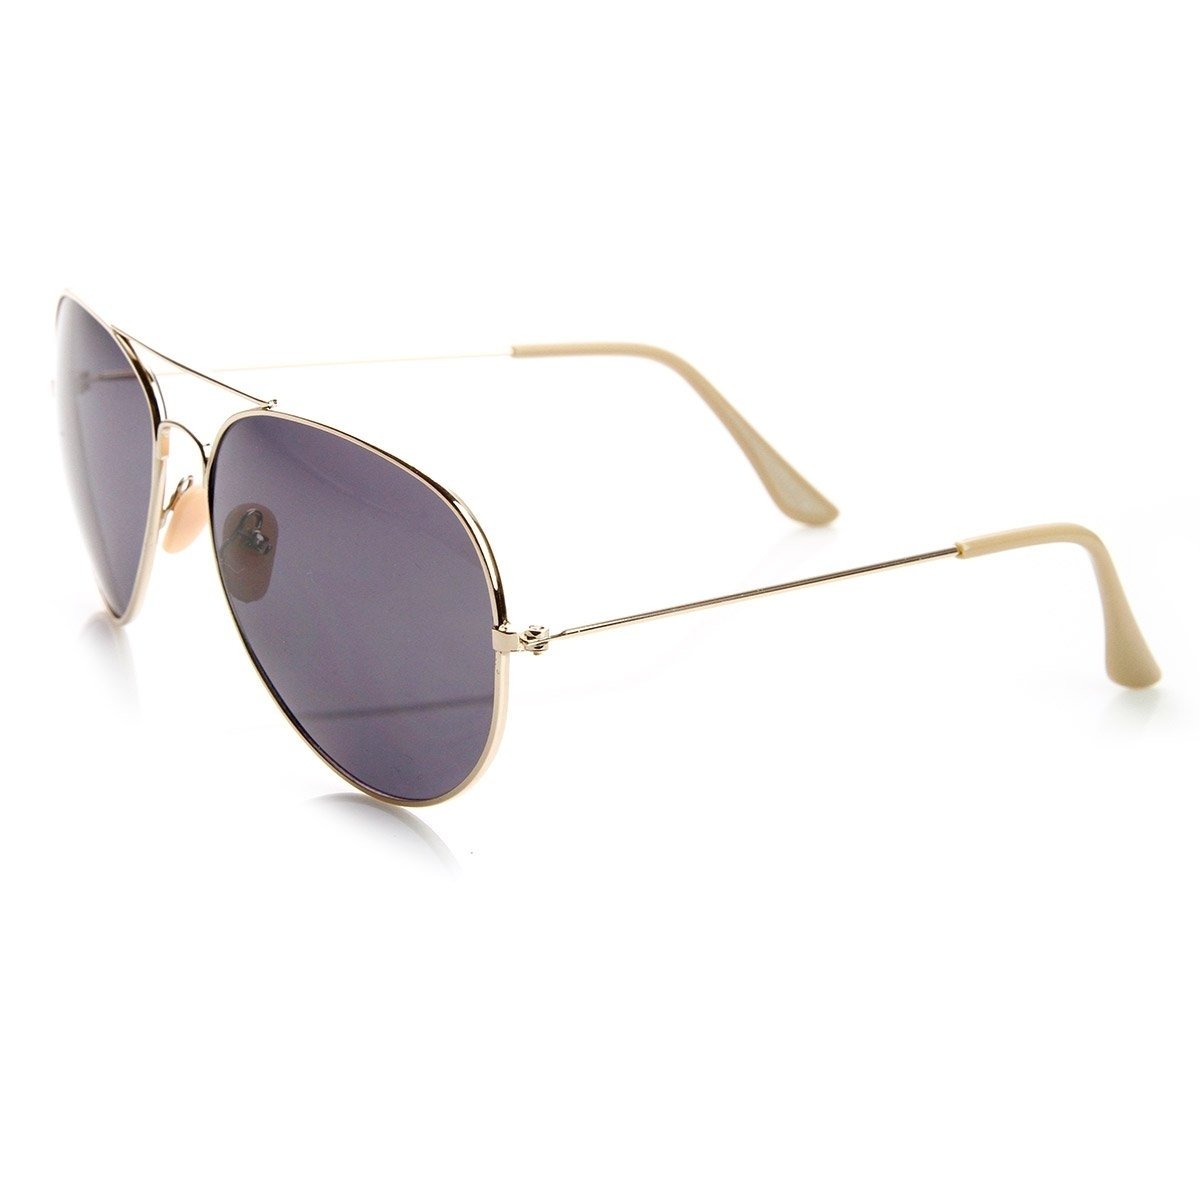 Original Basic Casual Fashion Metal Aviator Sunglasses - 56mm Lens - Gold Brown